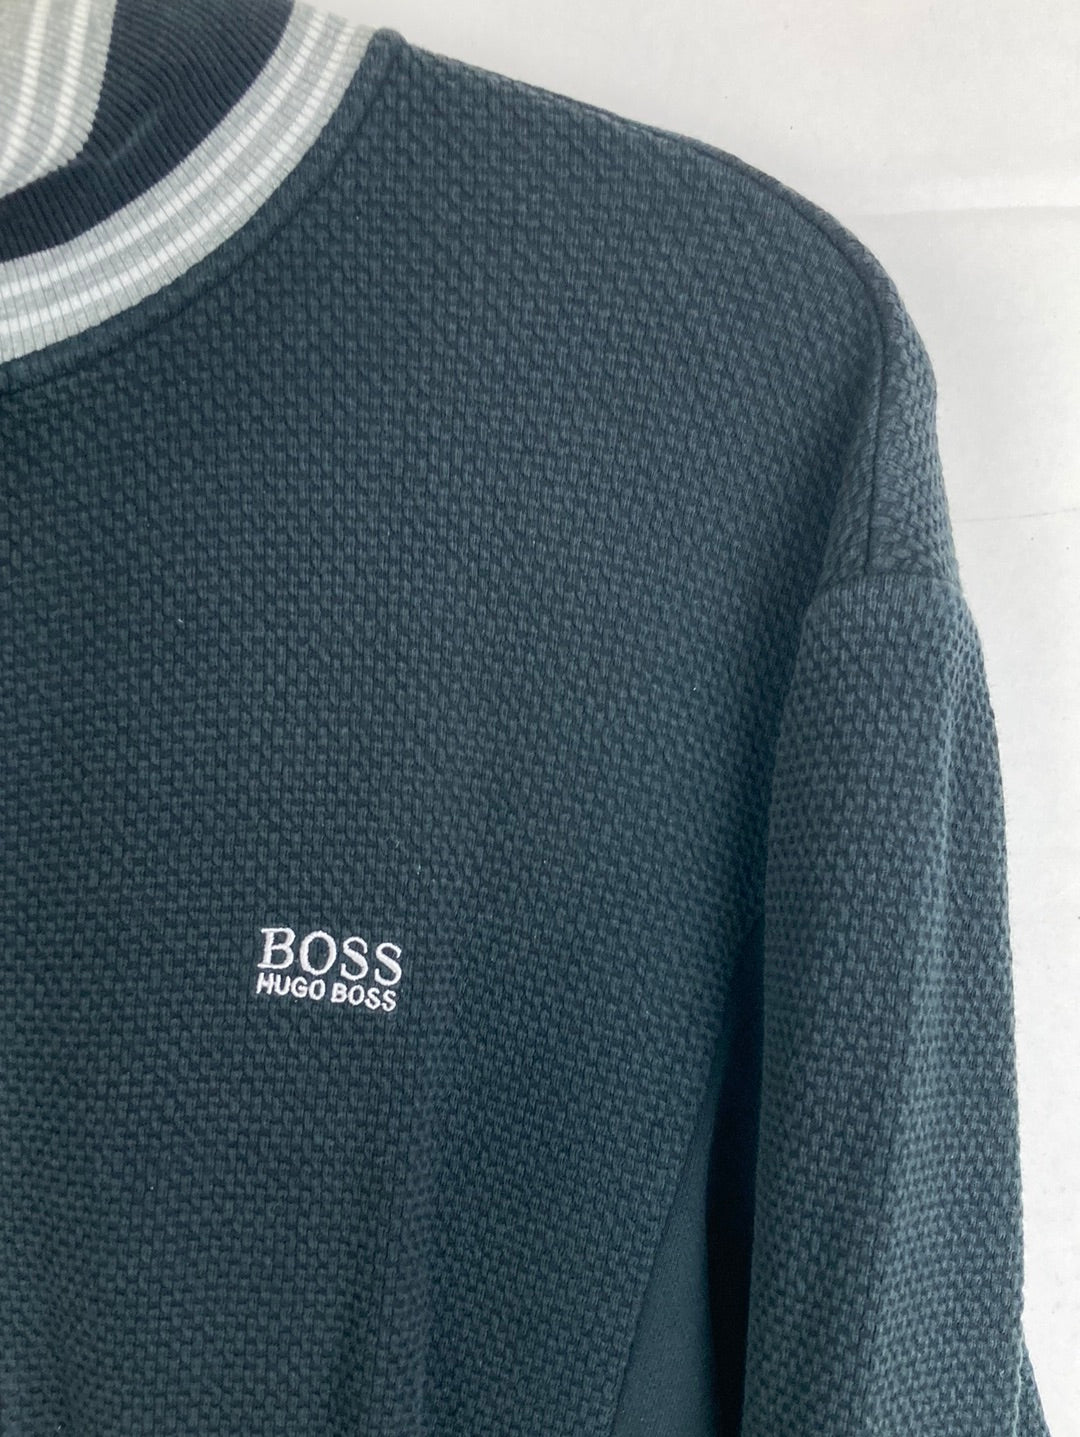 Hugo Boss jacket (M)